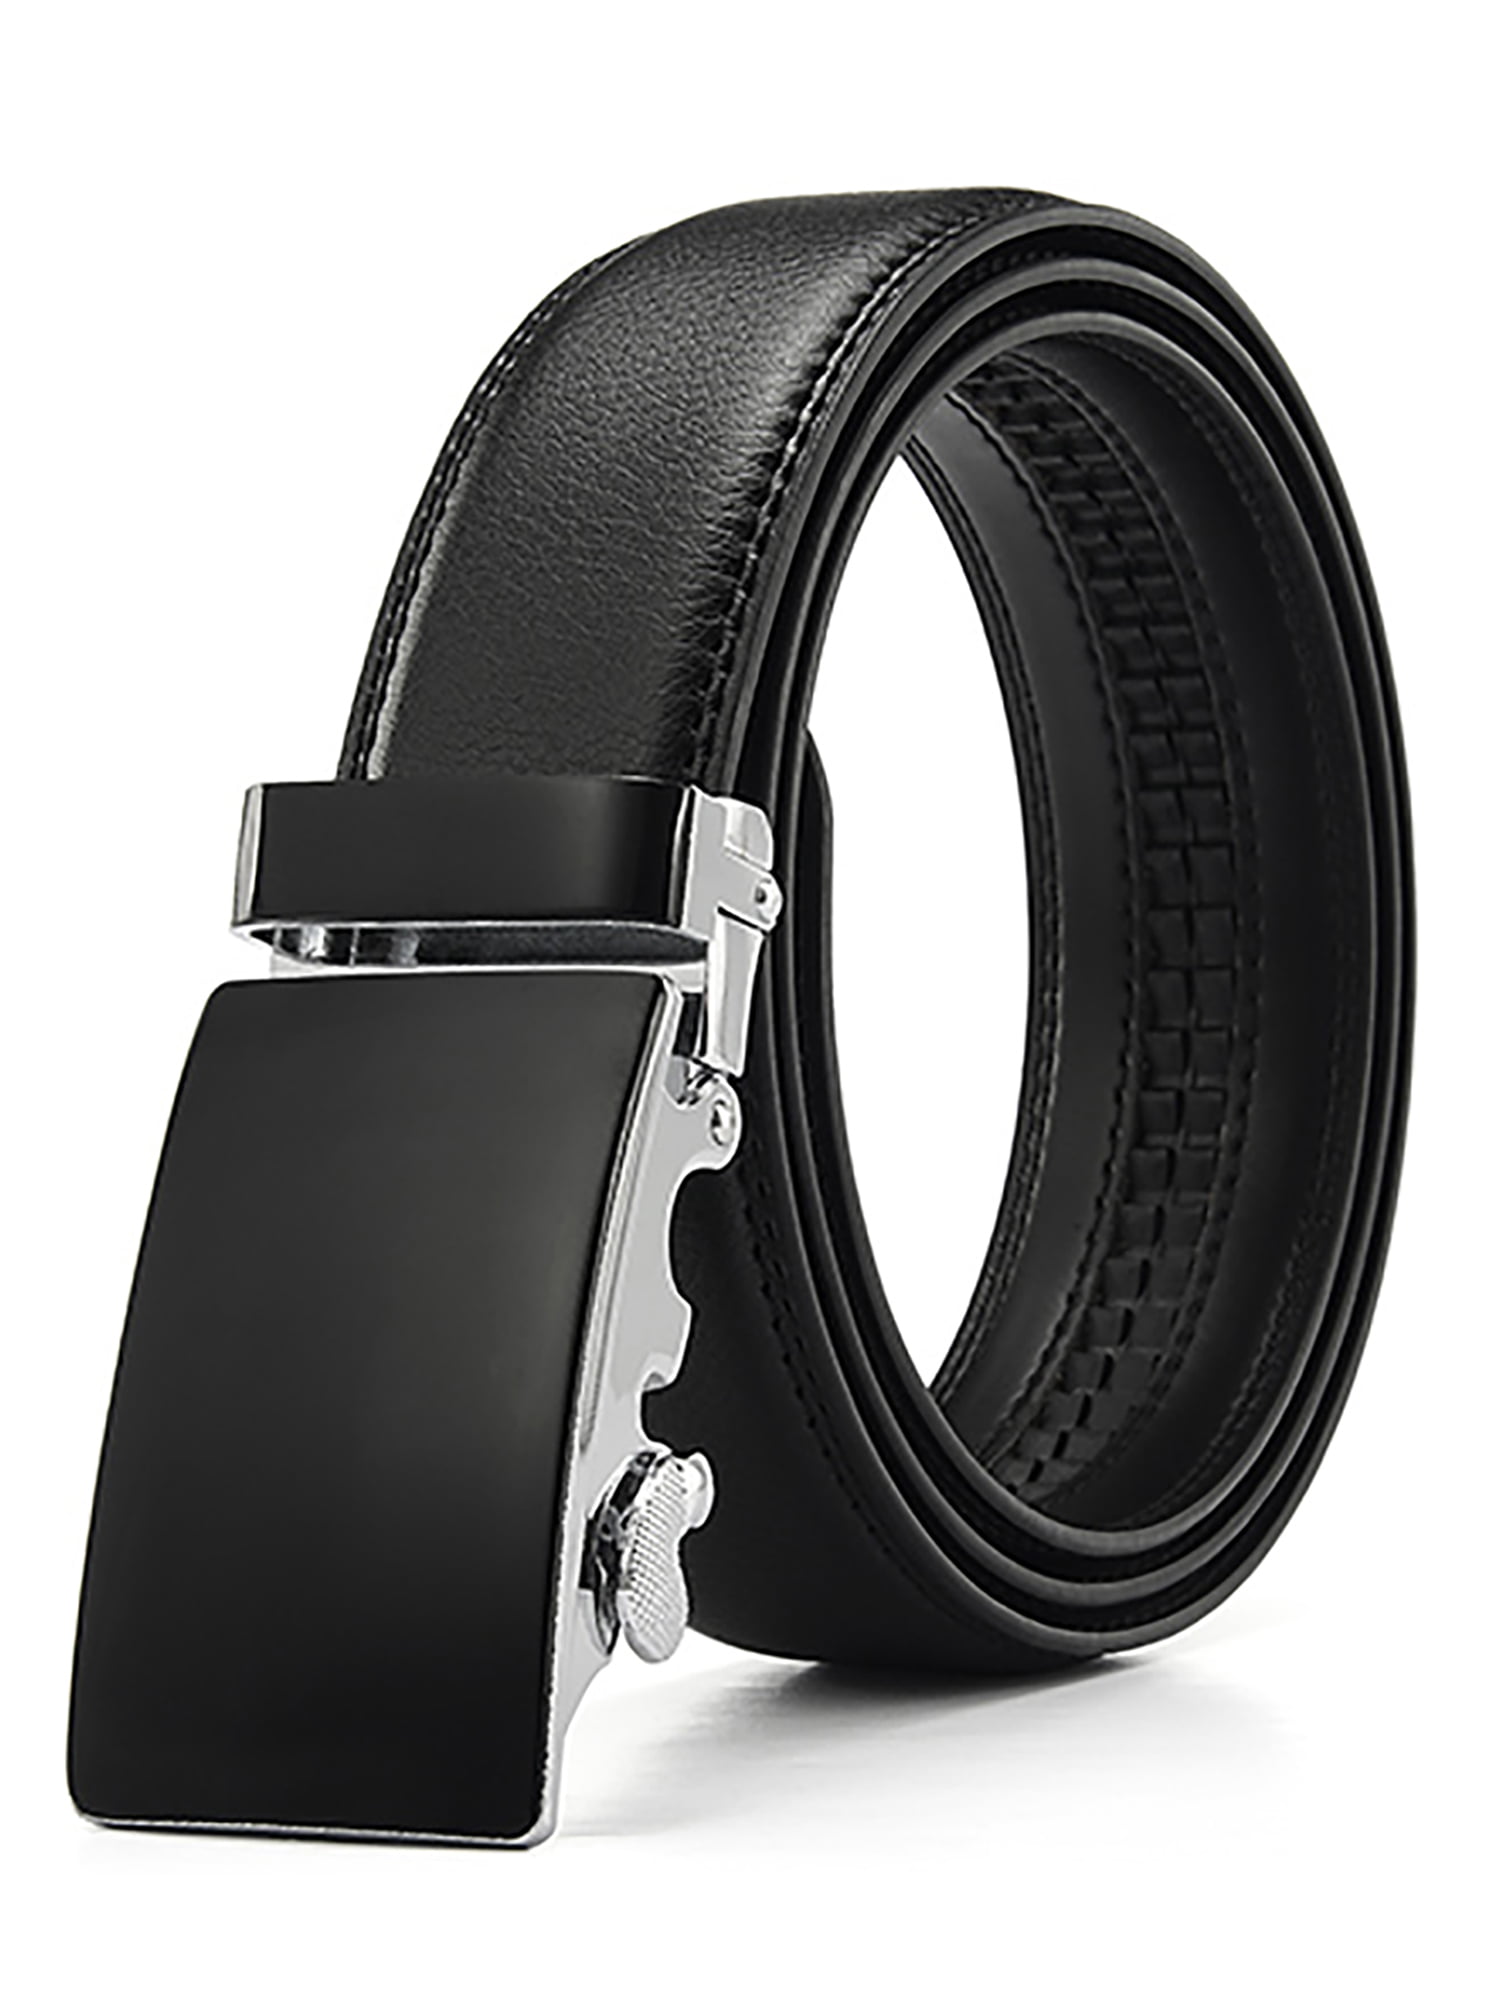 Mens Leather Belt Ratchet Automatic Belt for Men 1 3//8 Wide